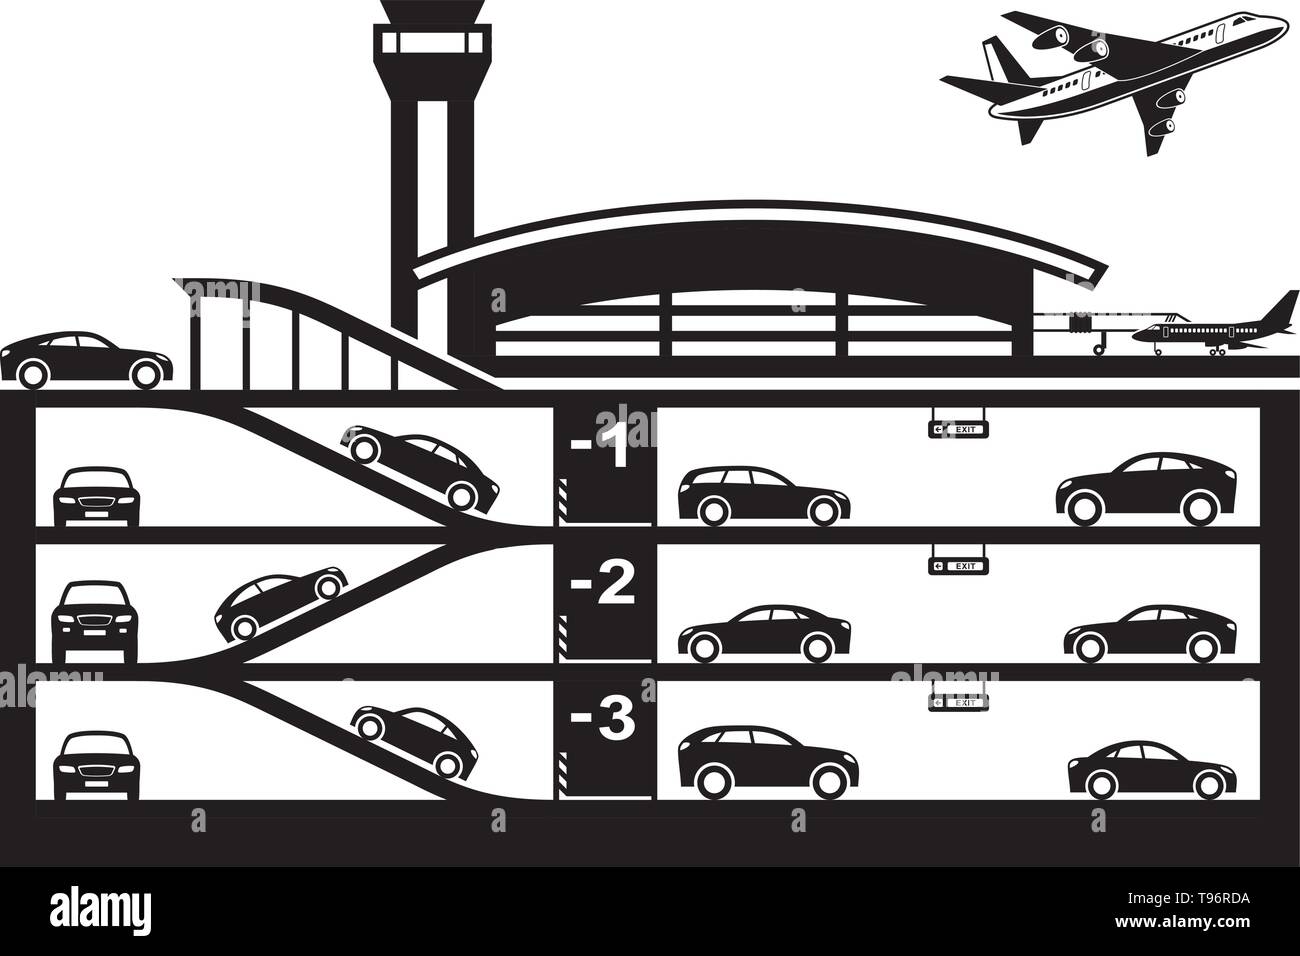 Parcheggio sotterraneo al aeroporto - illustrazione vettoriale Illustrazione Vettoriale